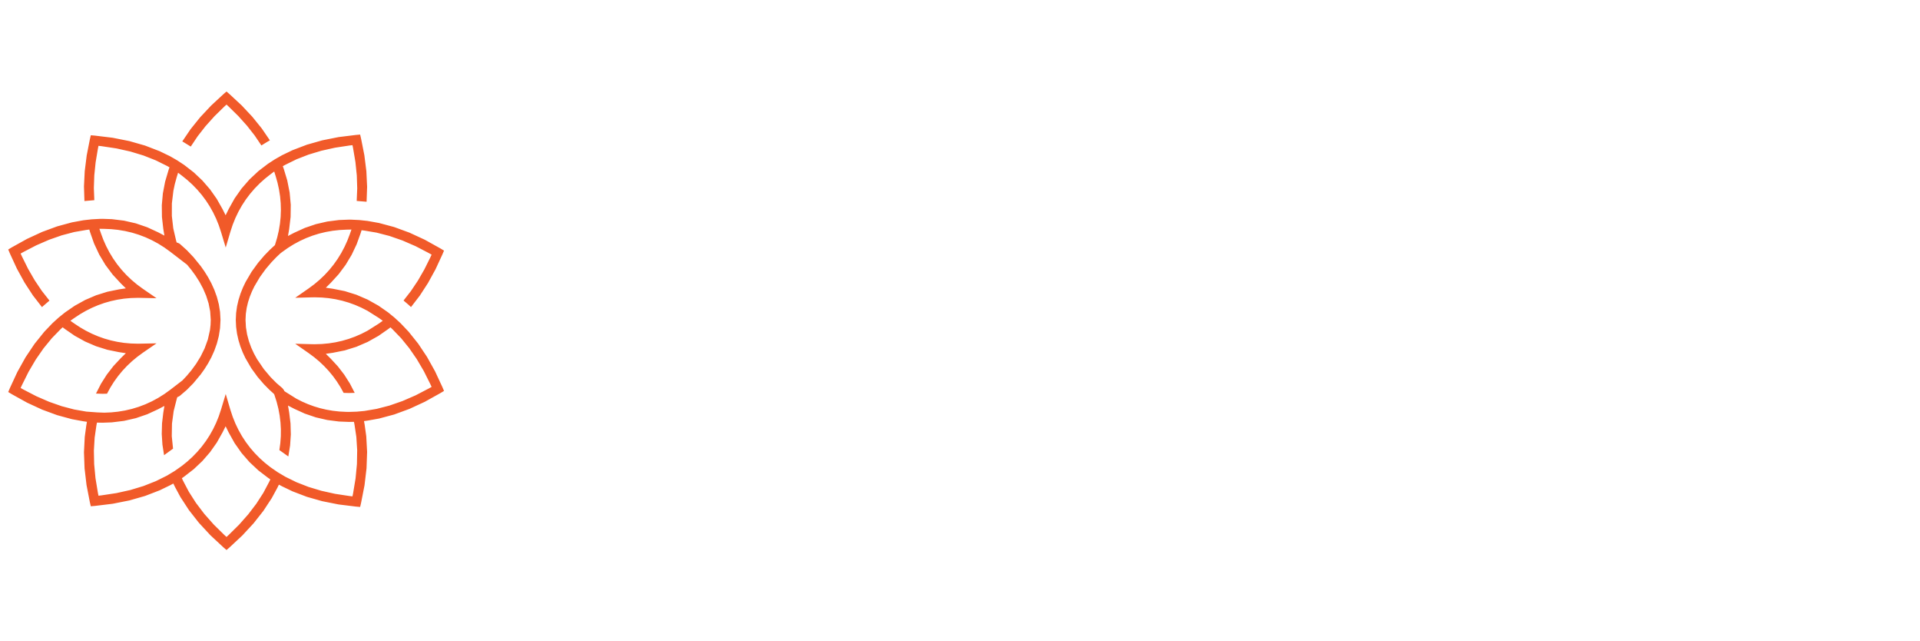 Bloom India